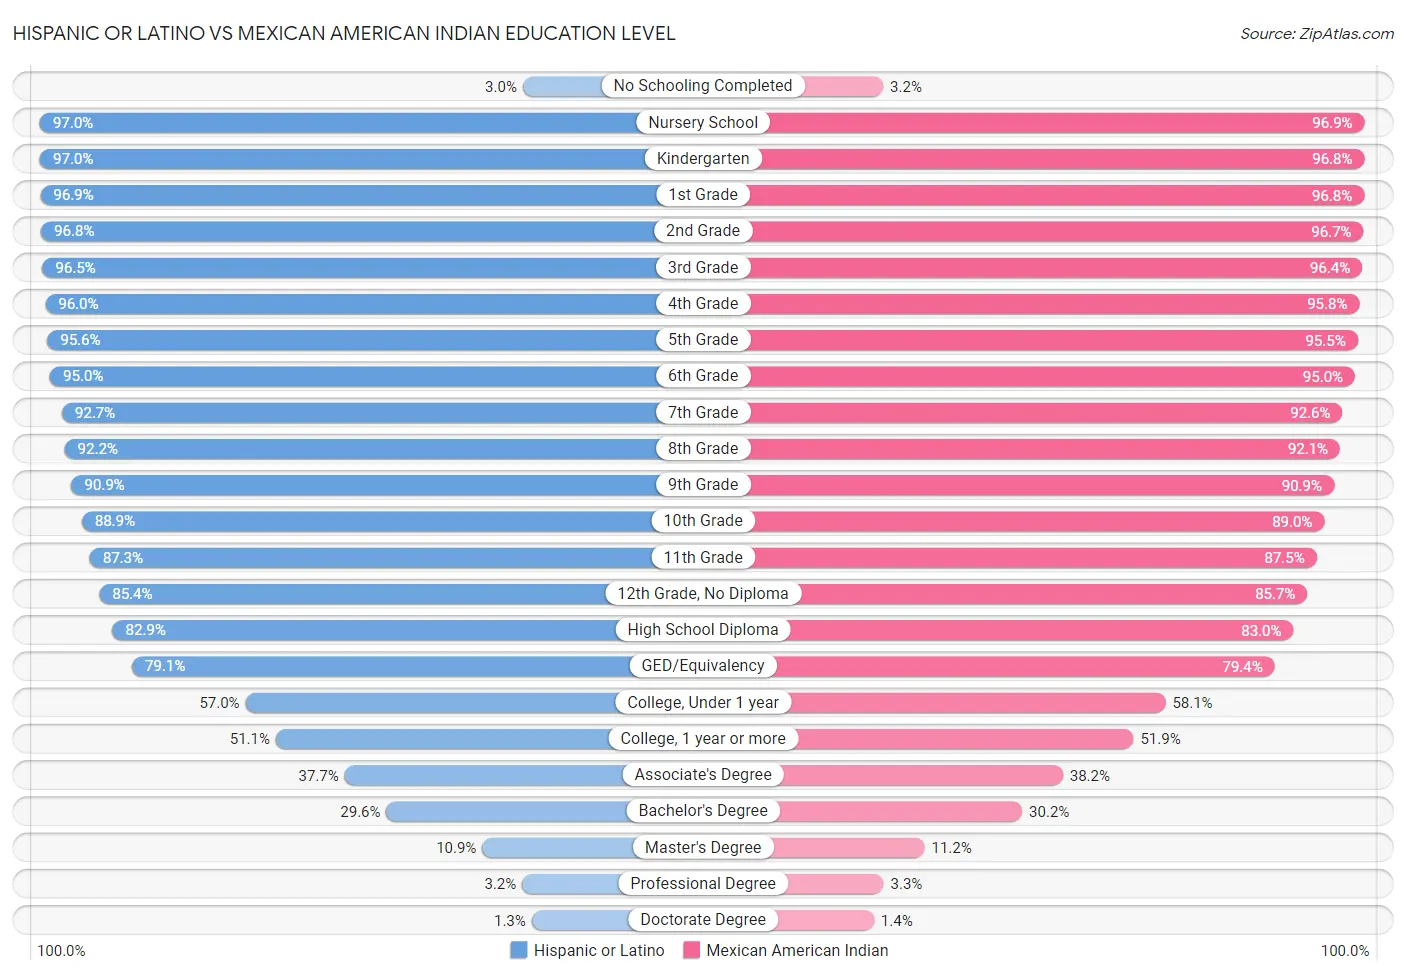 Hispanic or Latino vs Mexican American Indian Education Level